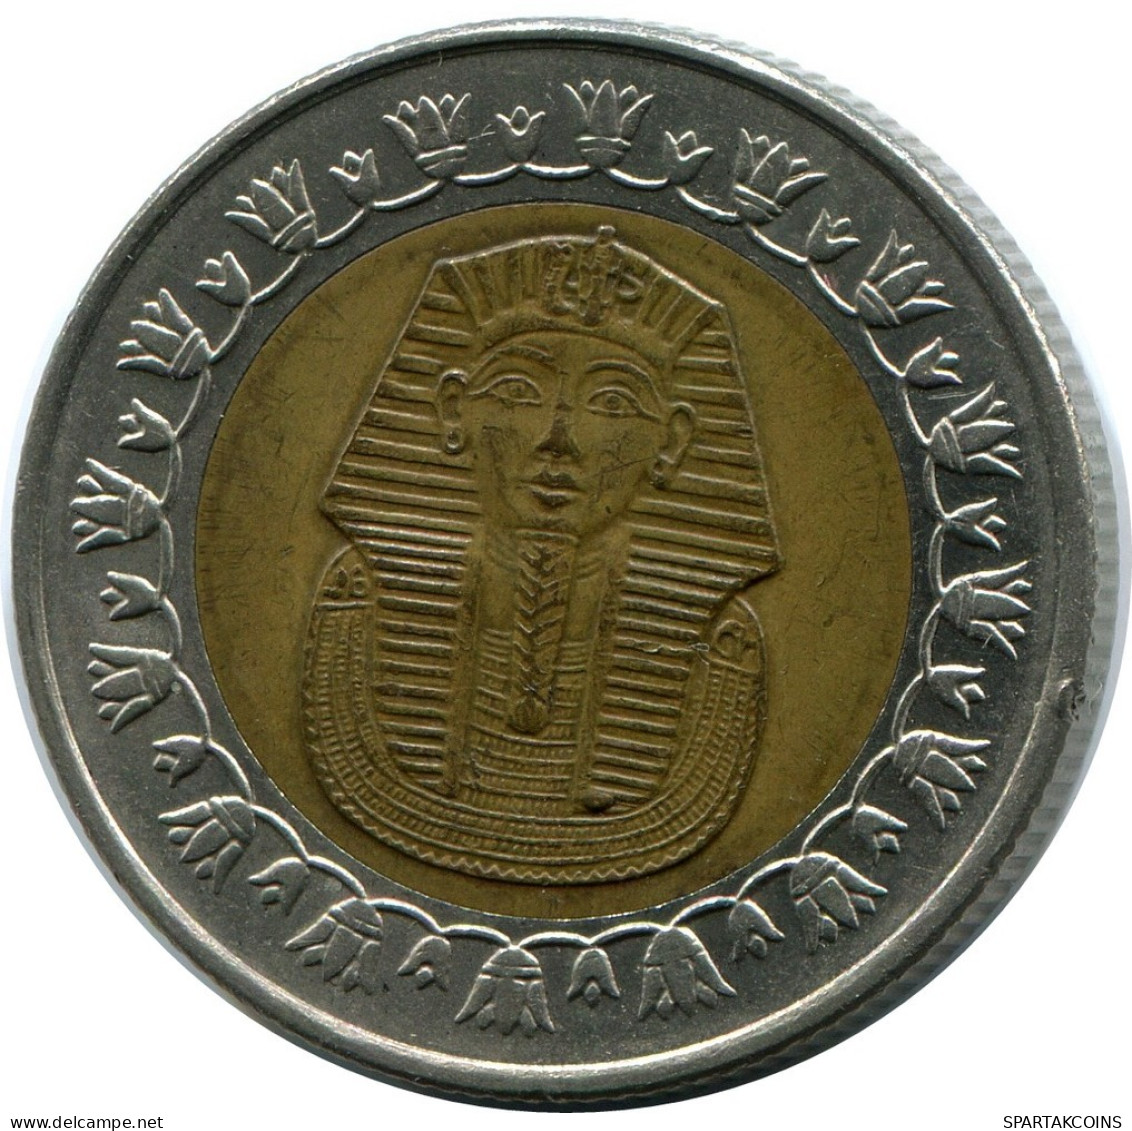 1 POUND 2008 EGIPTO EGYPT BIMETALLIC Islámico Moneda #AP995.E.A - Egypt